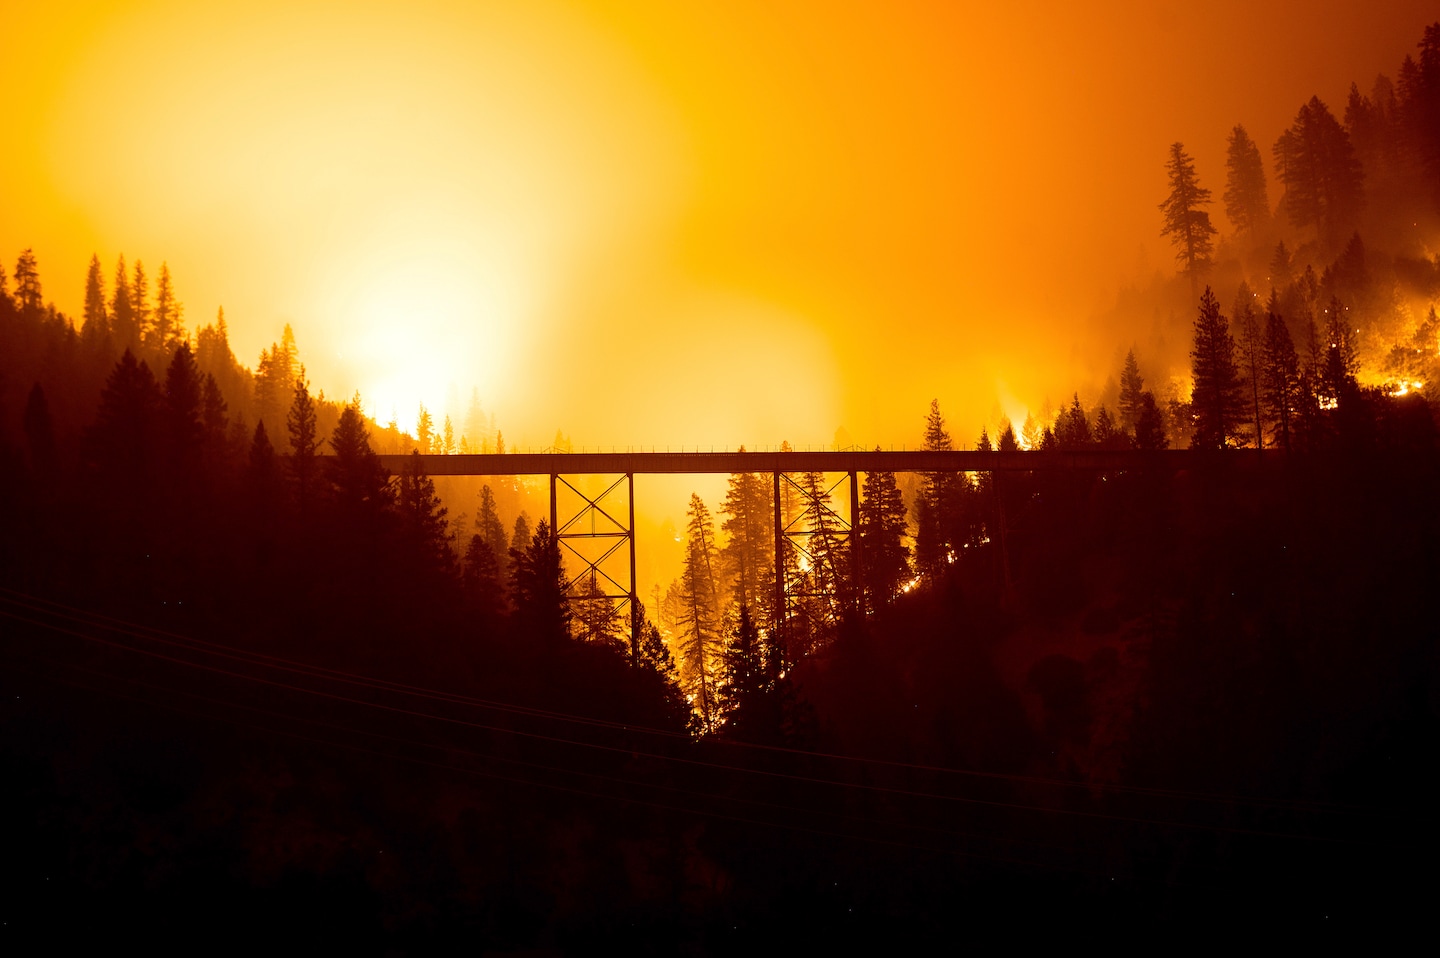 Dixie Fire: California's biggest fire so far this year burns more than 190,000 acres - The Washington Post